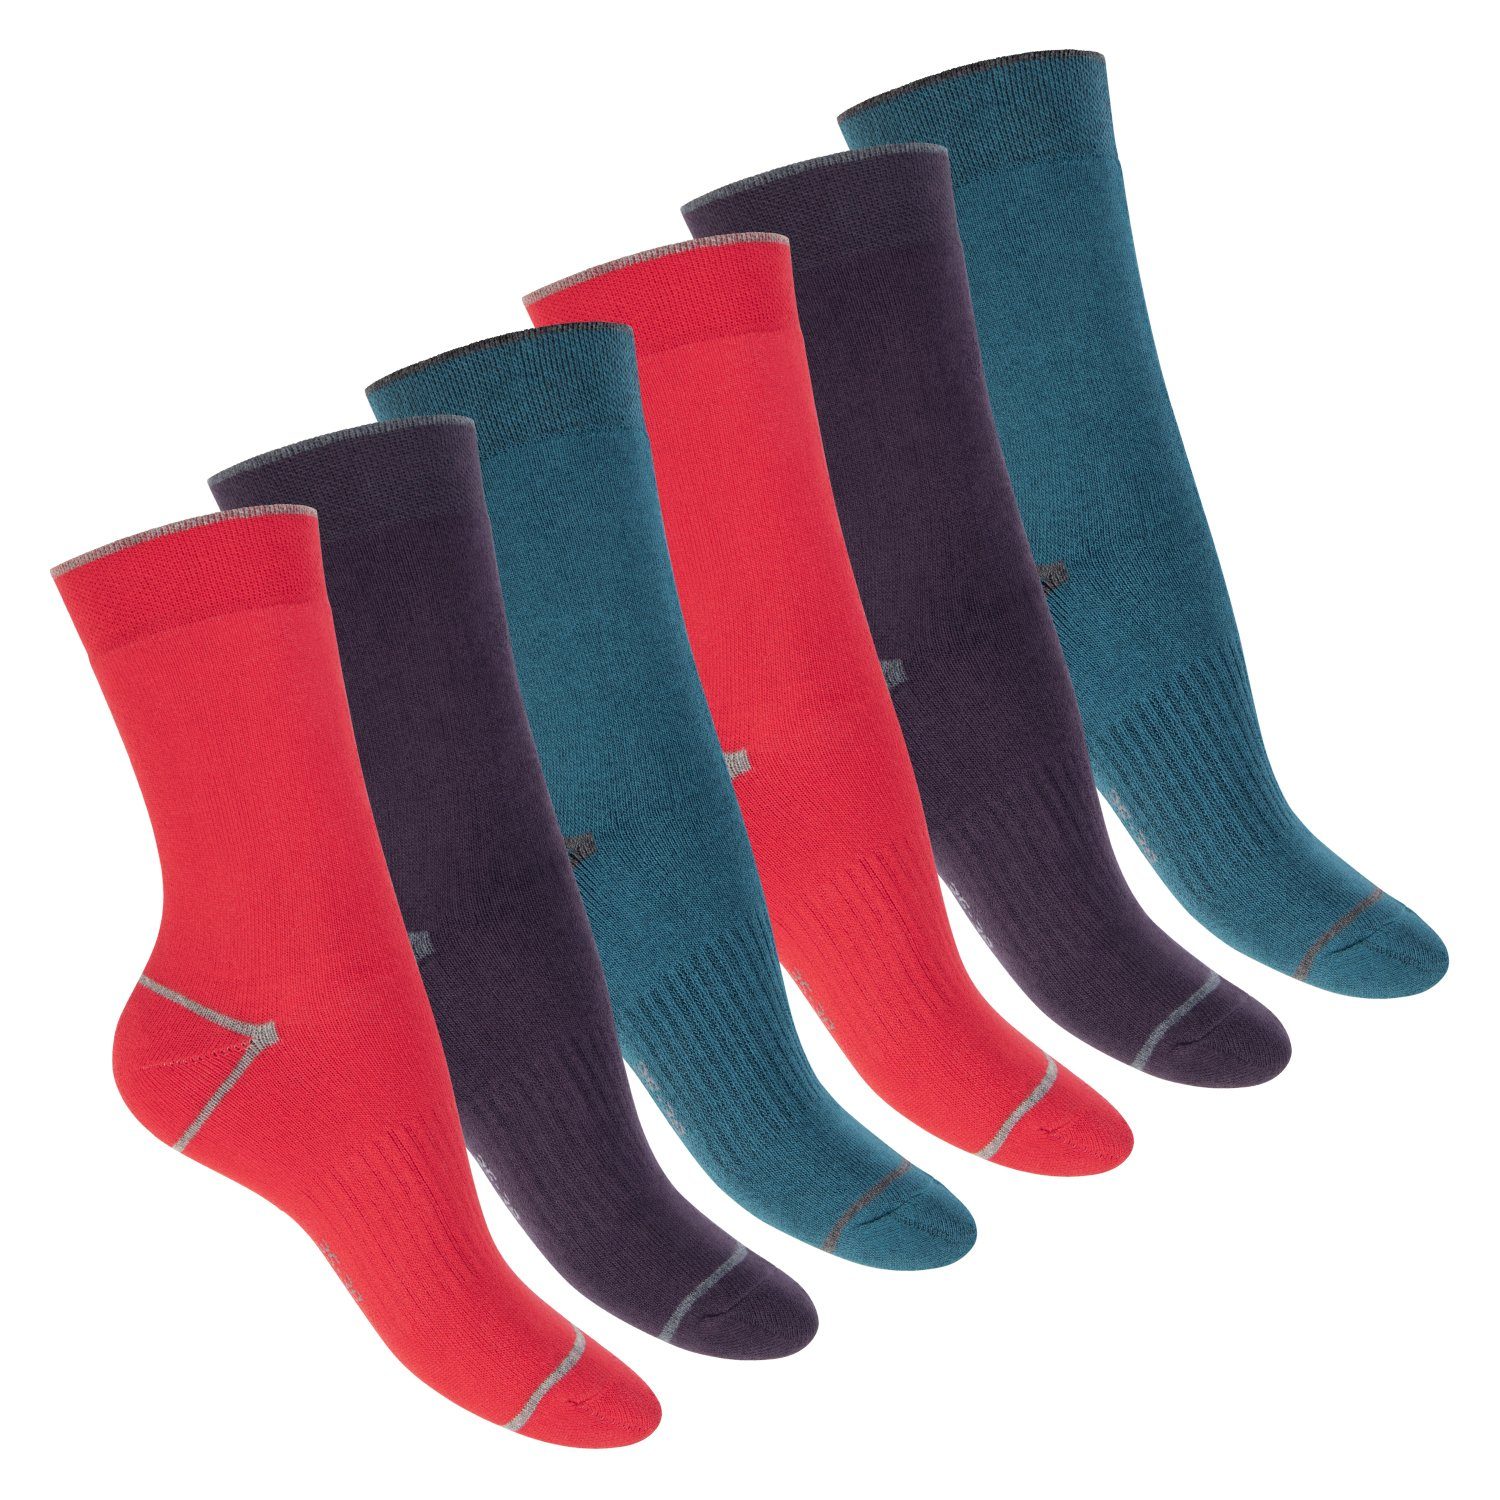 Footstar Thermosocken Thermo Winter Socken (6 Paar) für Damen & Herren, Vollfrottee Herbstfarben